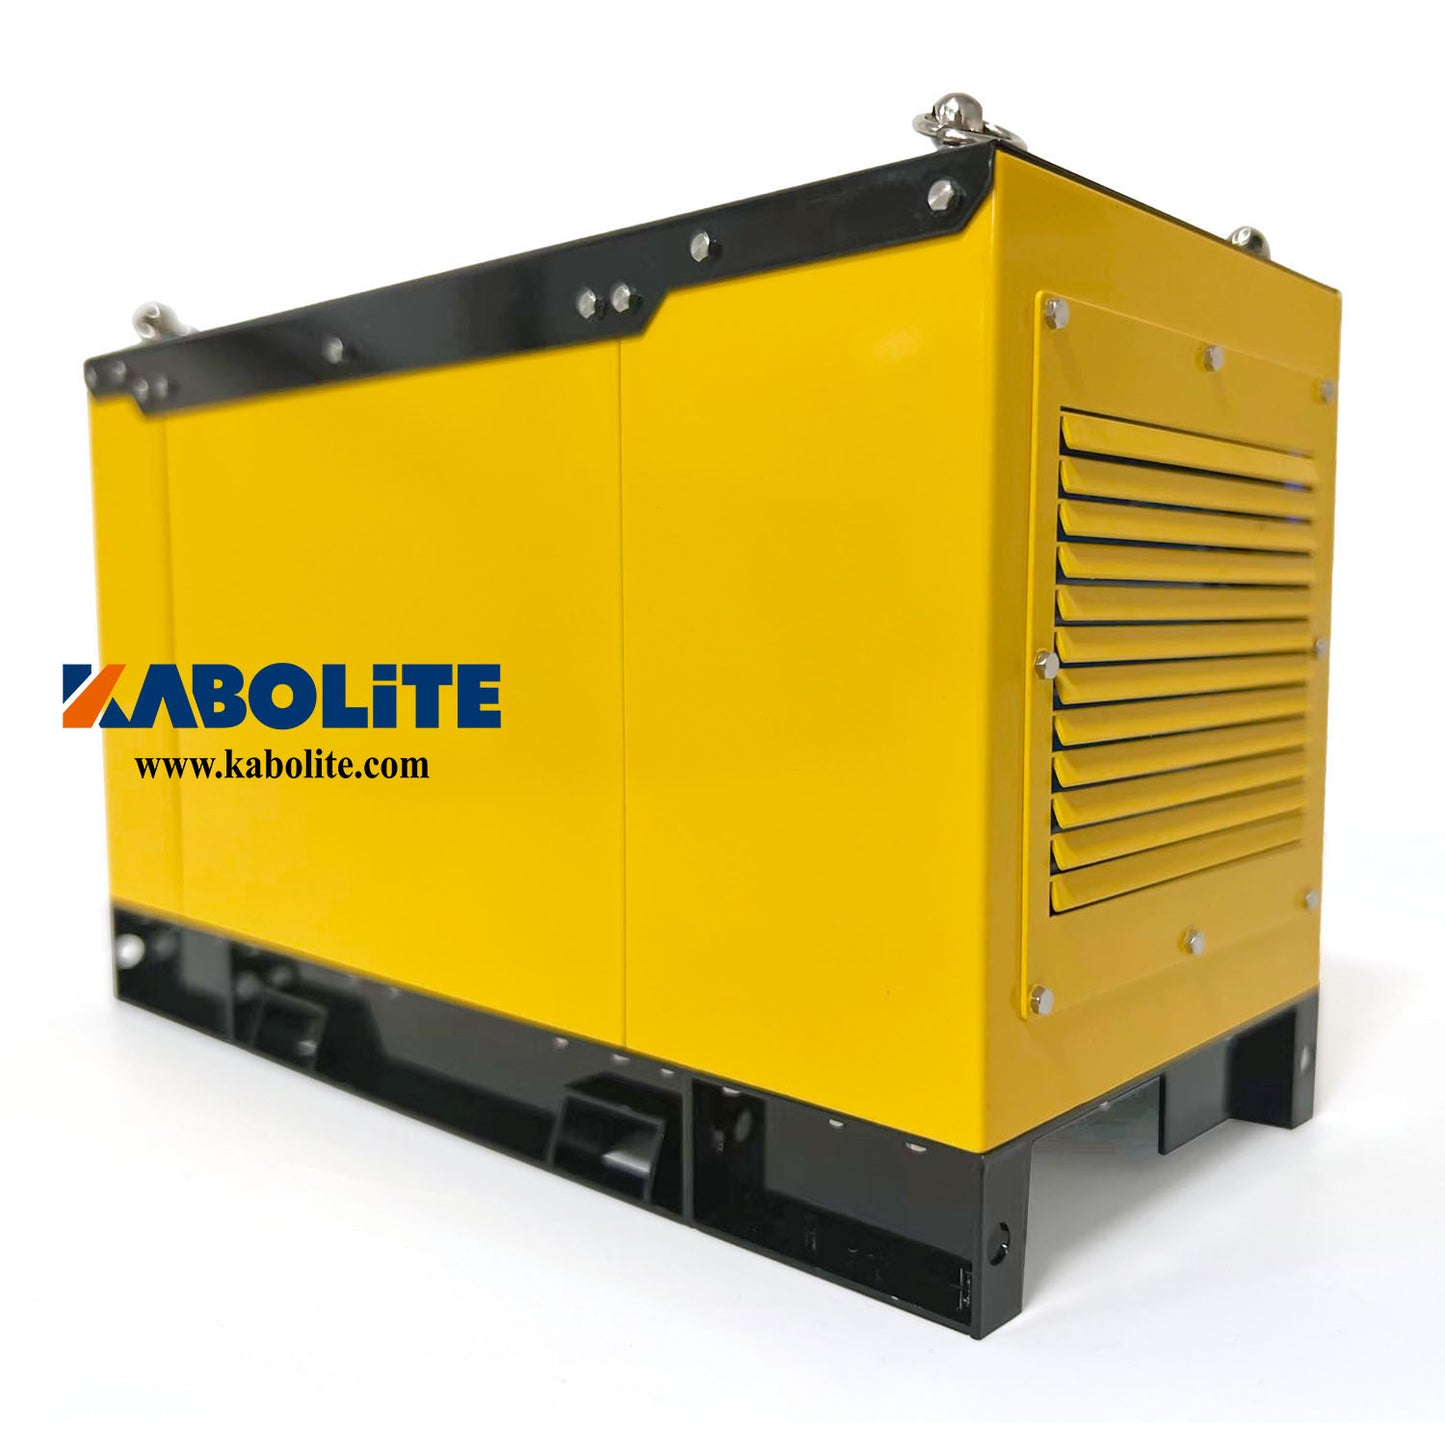 1/14 Metal Kabolite Power Box For 1:14 RC Construction Vehicles Car Radio Control Truck Loader Dumper DIY Hobby Emulation Model